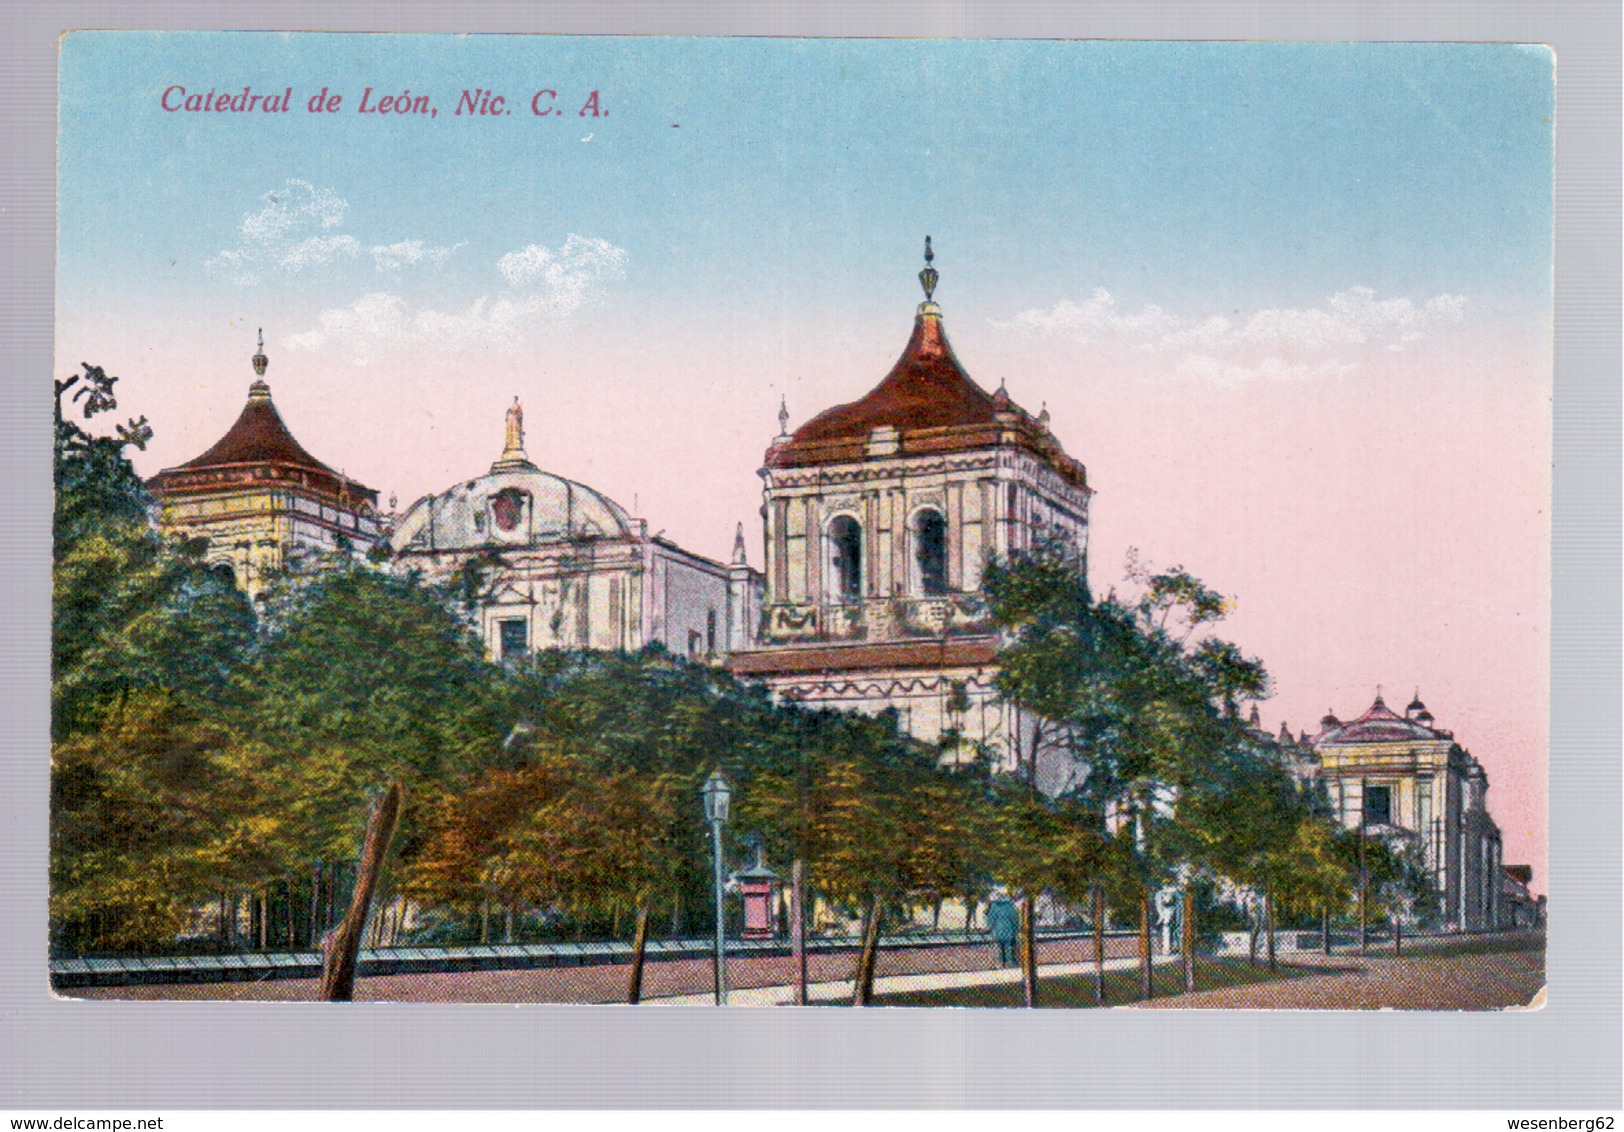 Nicaragua Catedral De Leon, Nic. C.A. Ca 1920 Old Postcard - Nicaragua